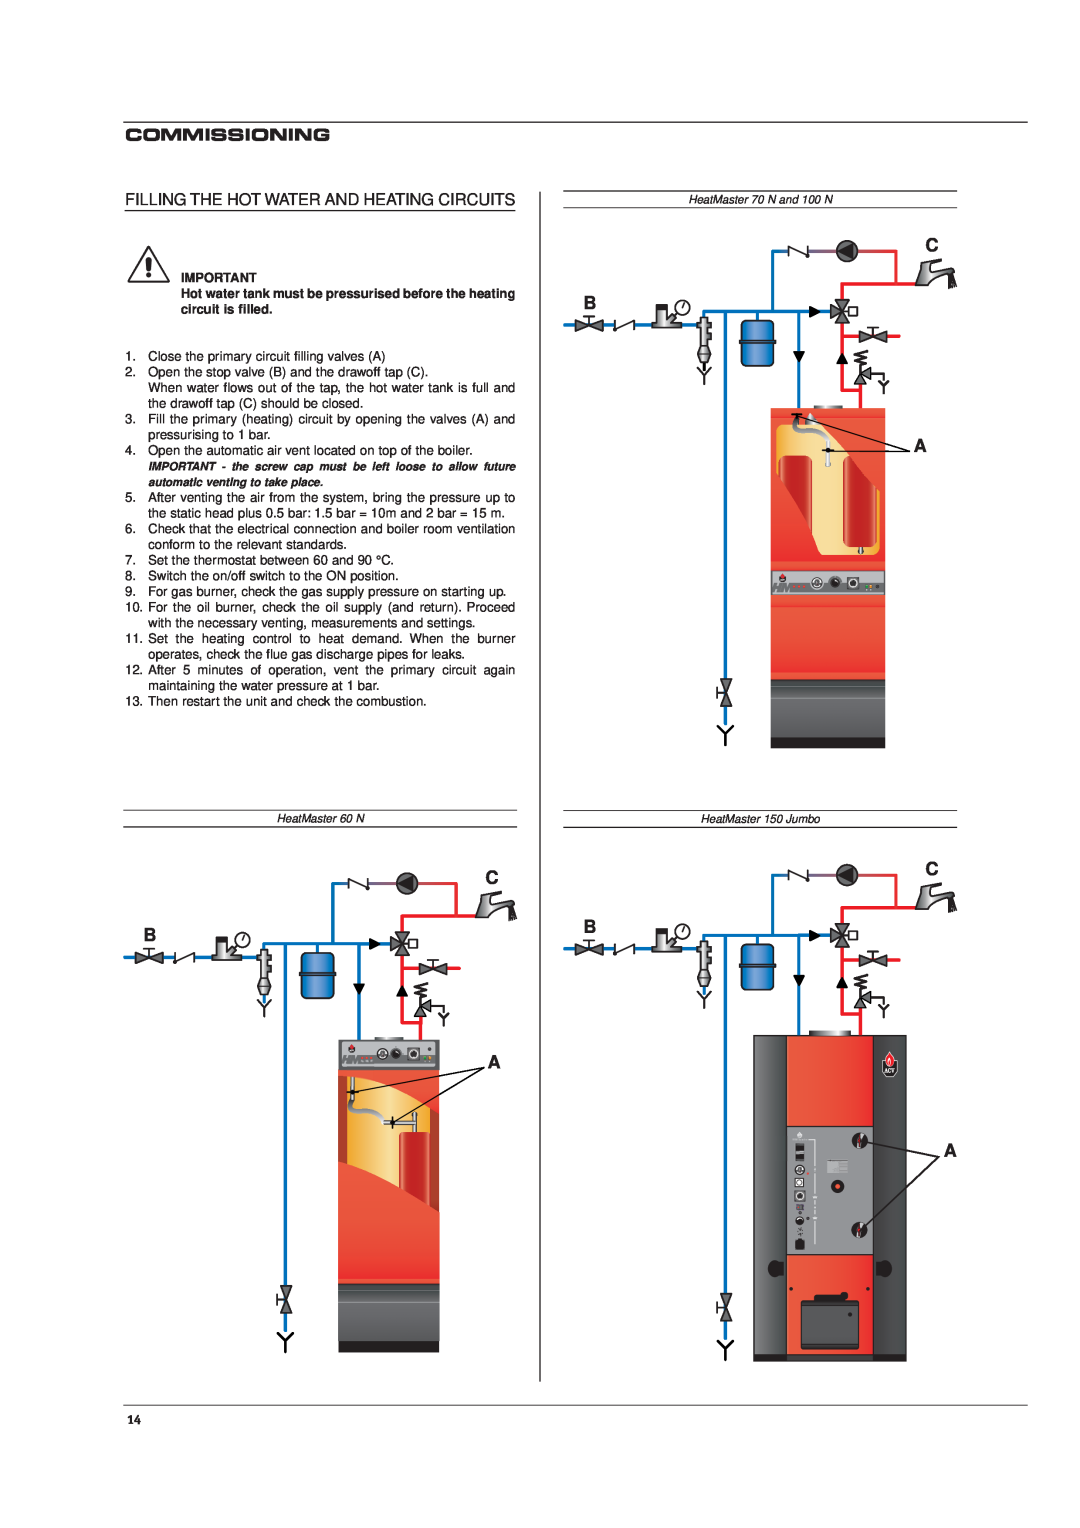 Heatmaster 70 N, HM 60 N, 150 JUMBO, 100 N manual Commissioning, C B A 